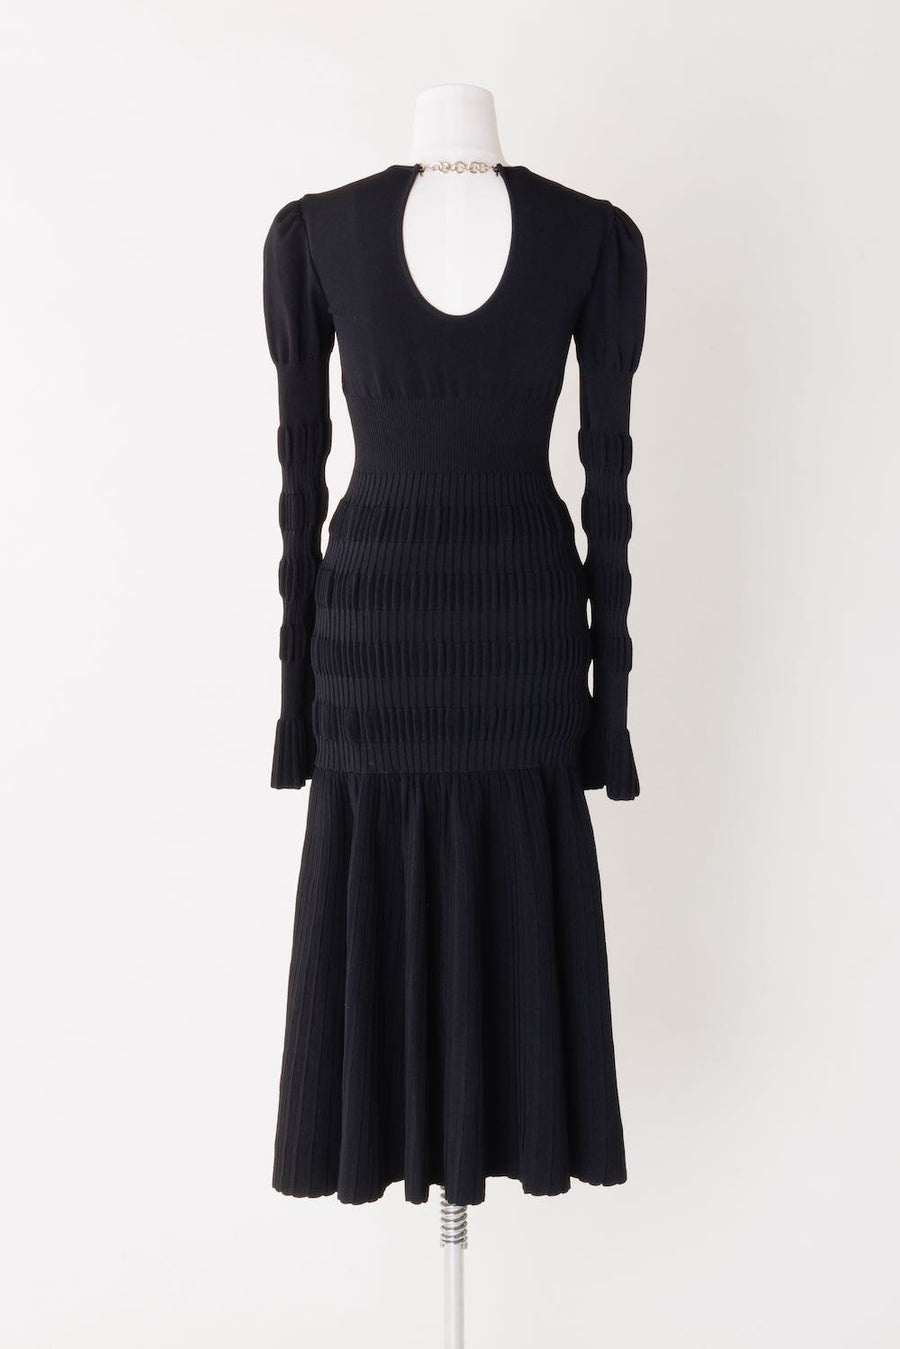 FETICO's Stripe Knit Midi Dress (Dress) Mail Order | Palette Art